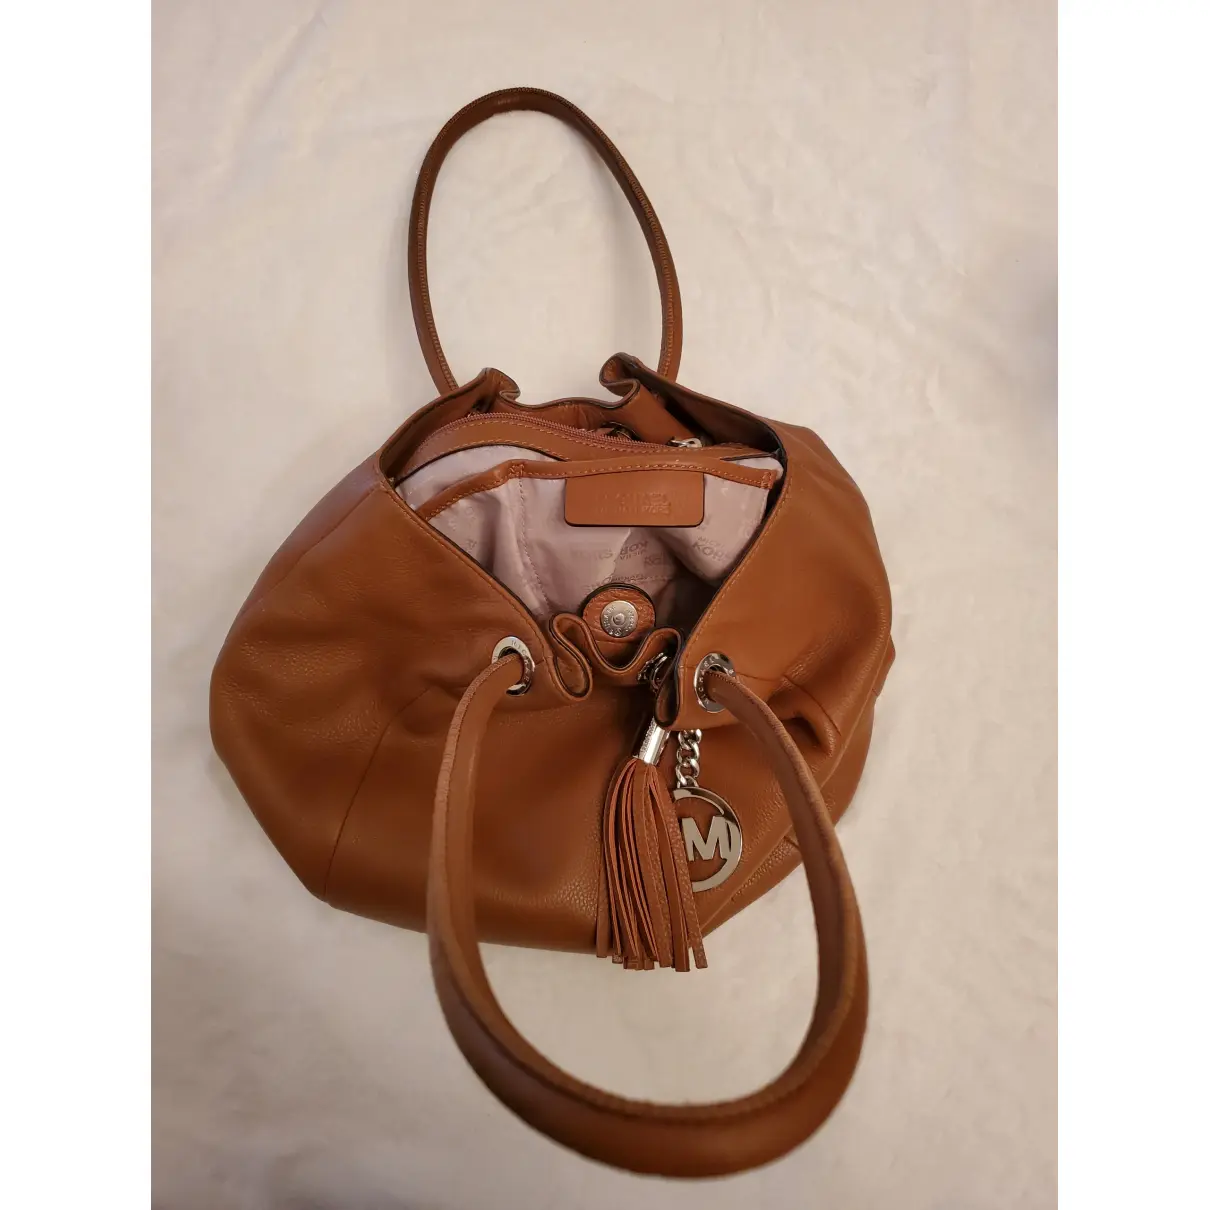 Camden leather handbag Michael Kors